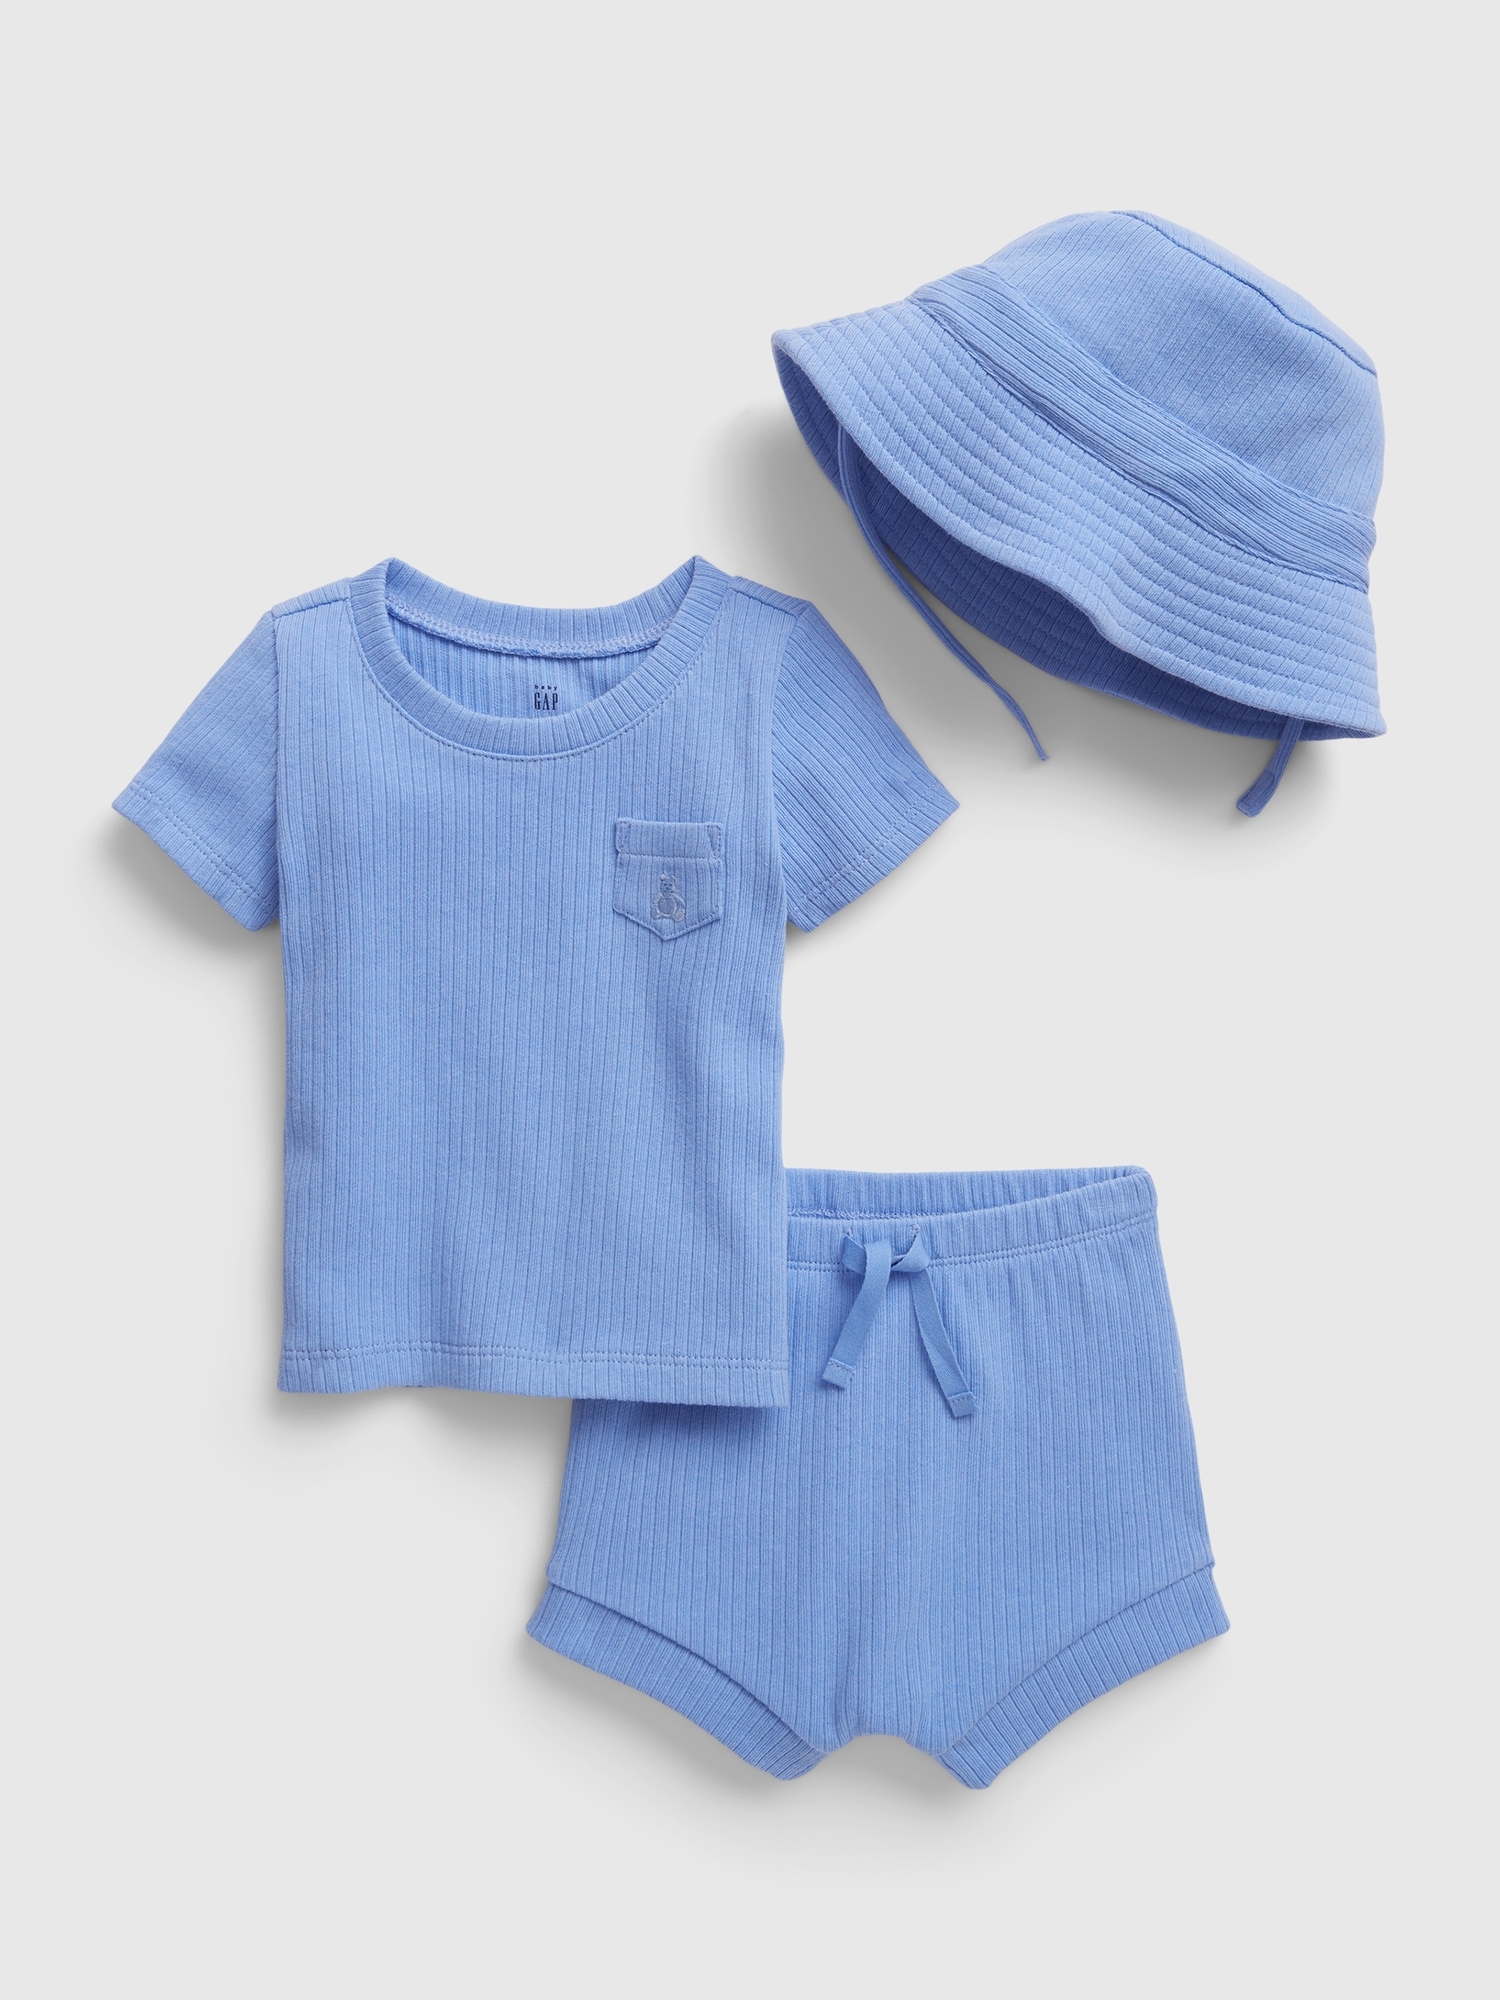 Gap Baby Three-Piece Rib Outfit Set blue. 1